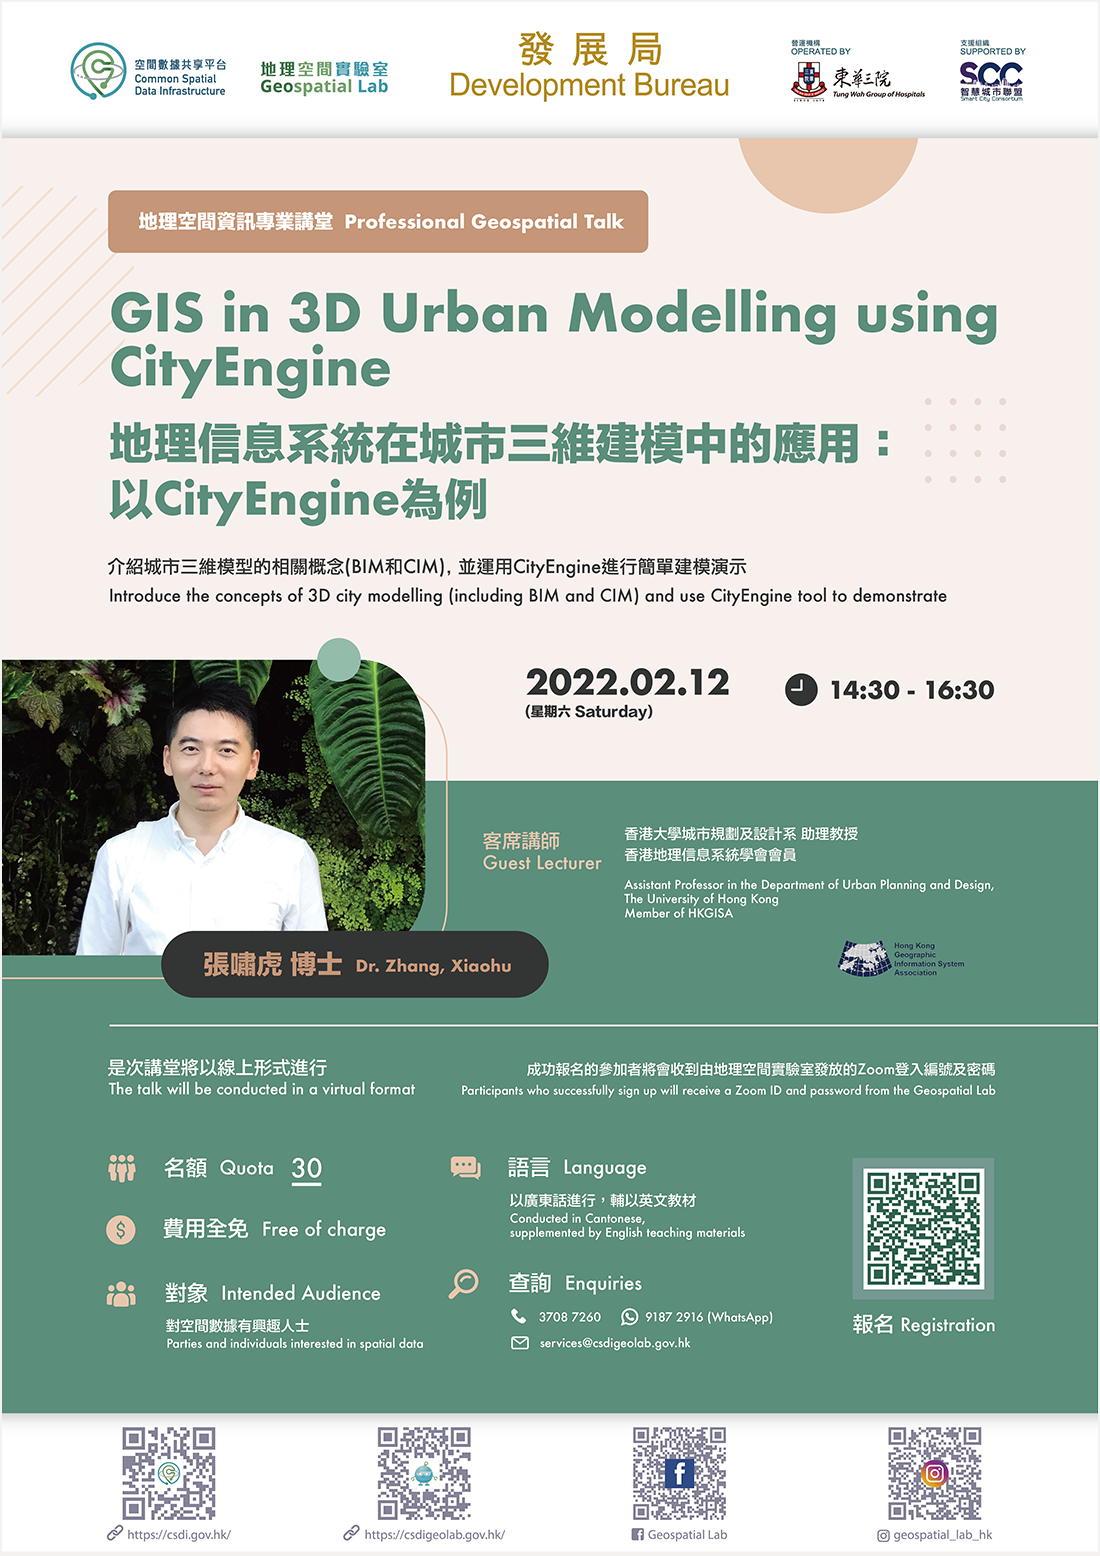 Professional Geospatial Talk - GIS in 3D Urban Modelling using CityEngine